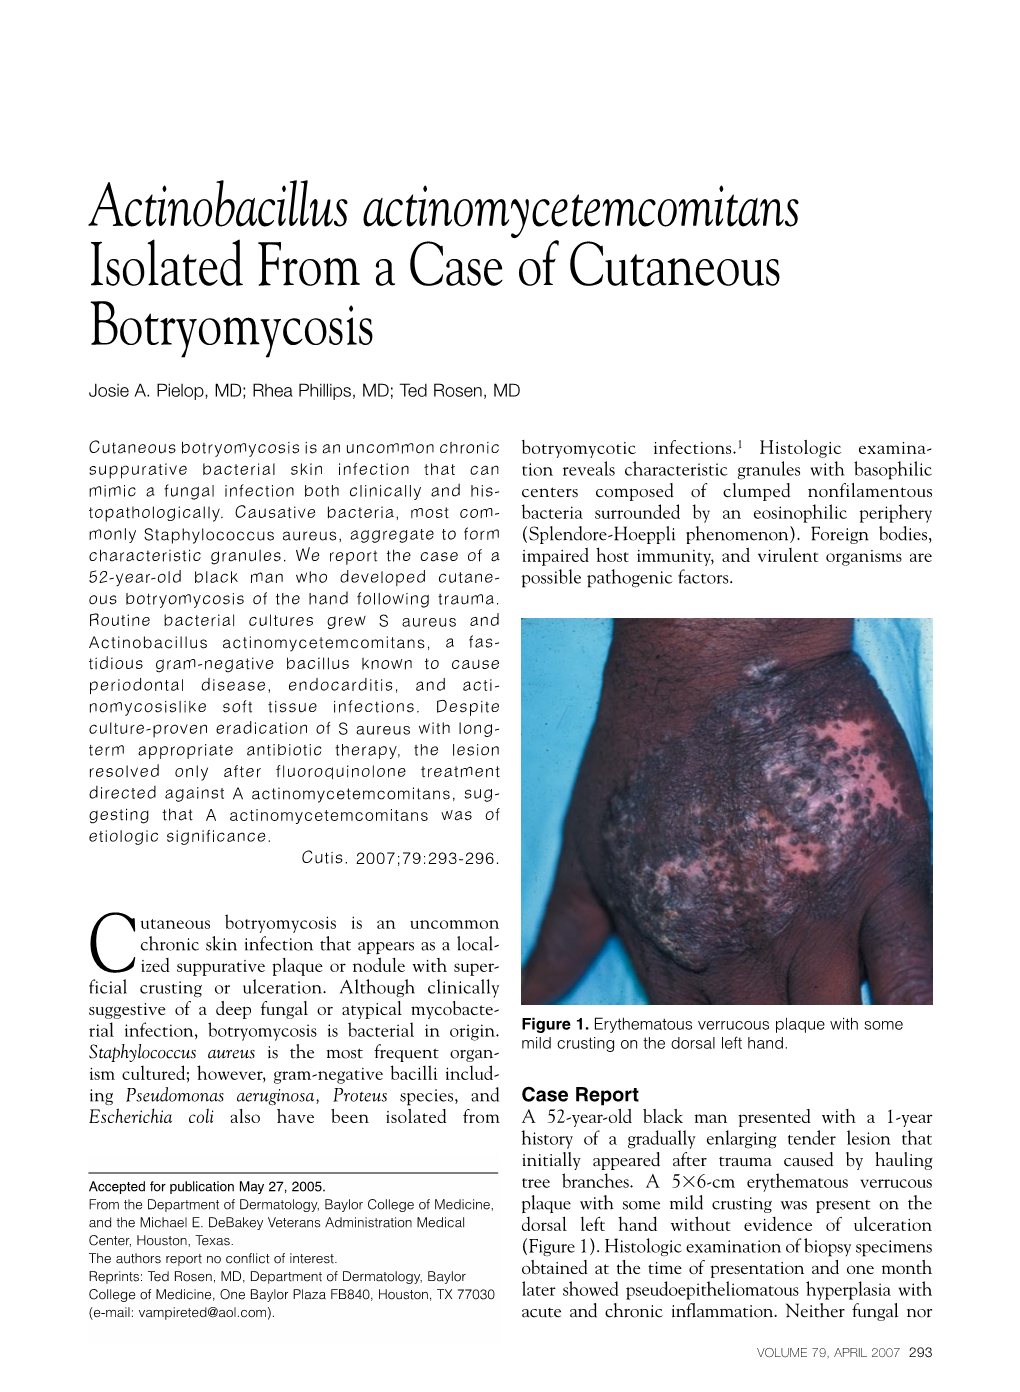 Actinobacillus Actinomycetemcomitans Isolated from a Case of Cutaneous Botryomycosis